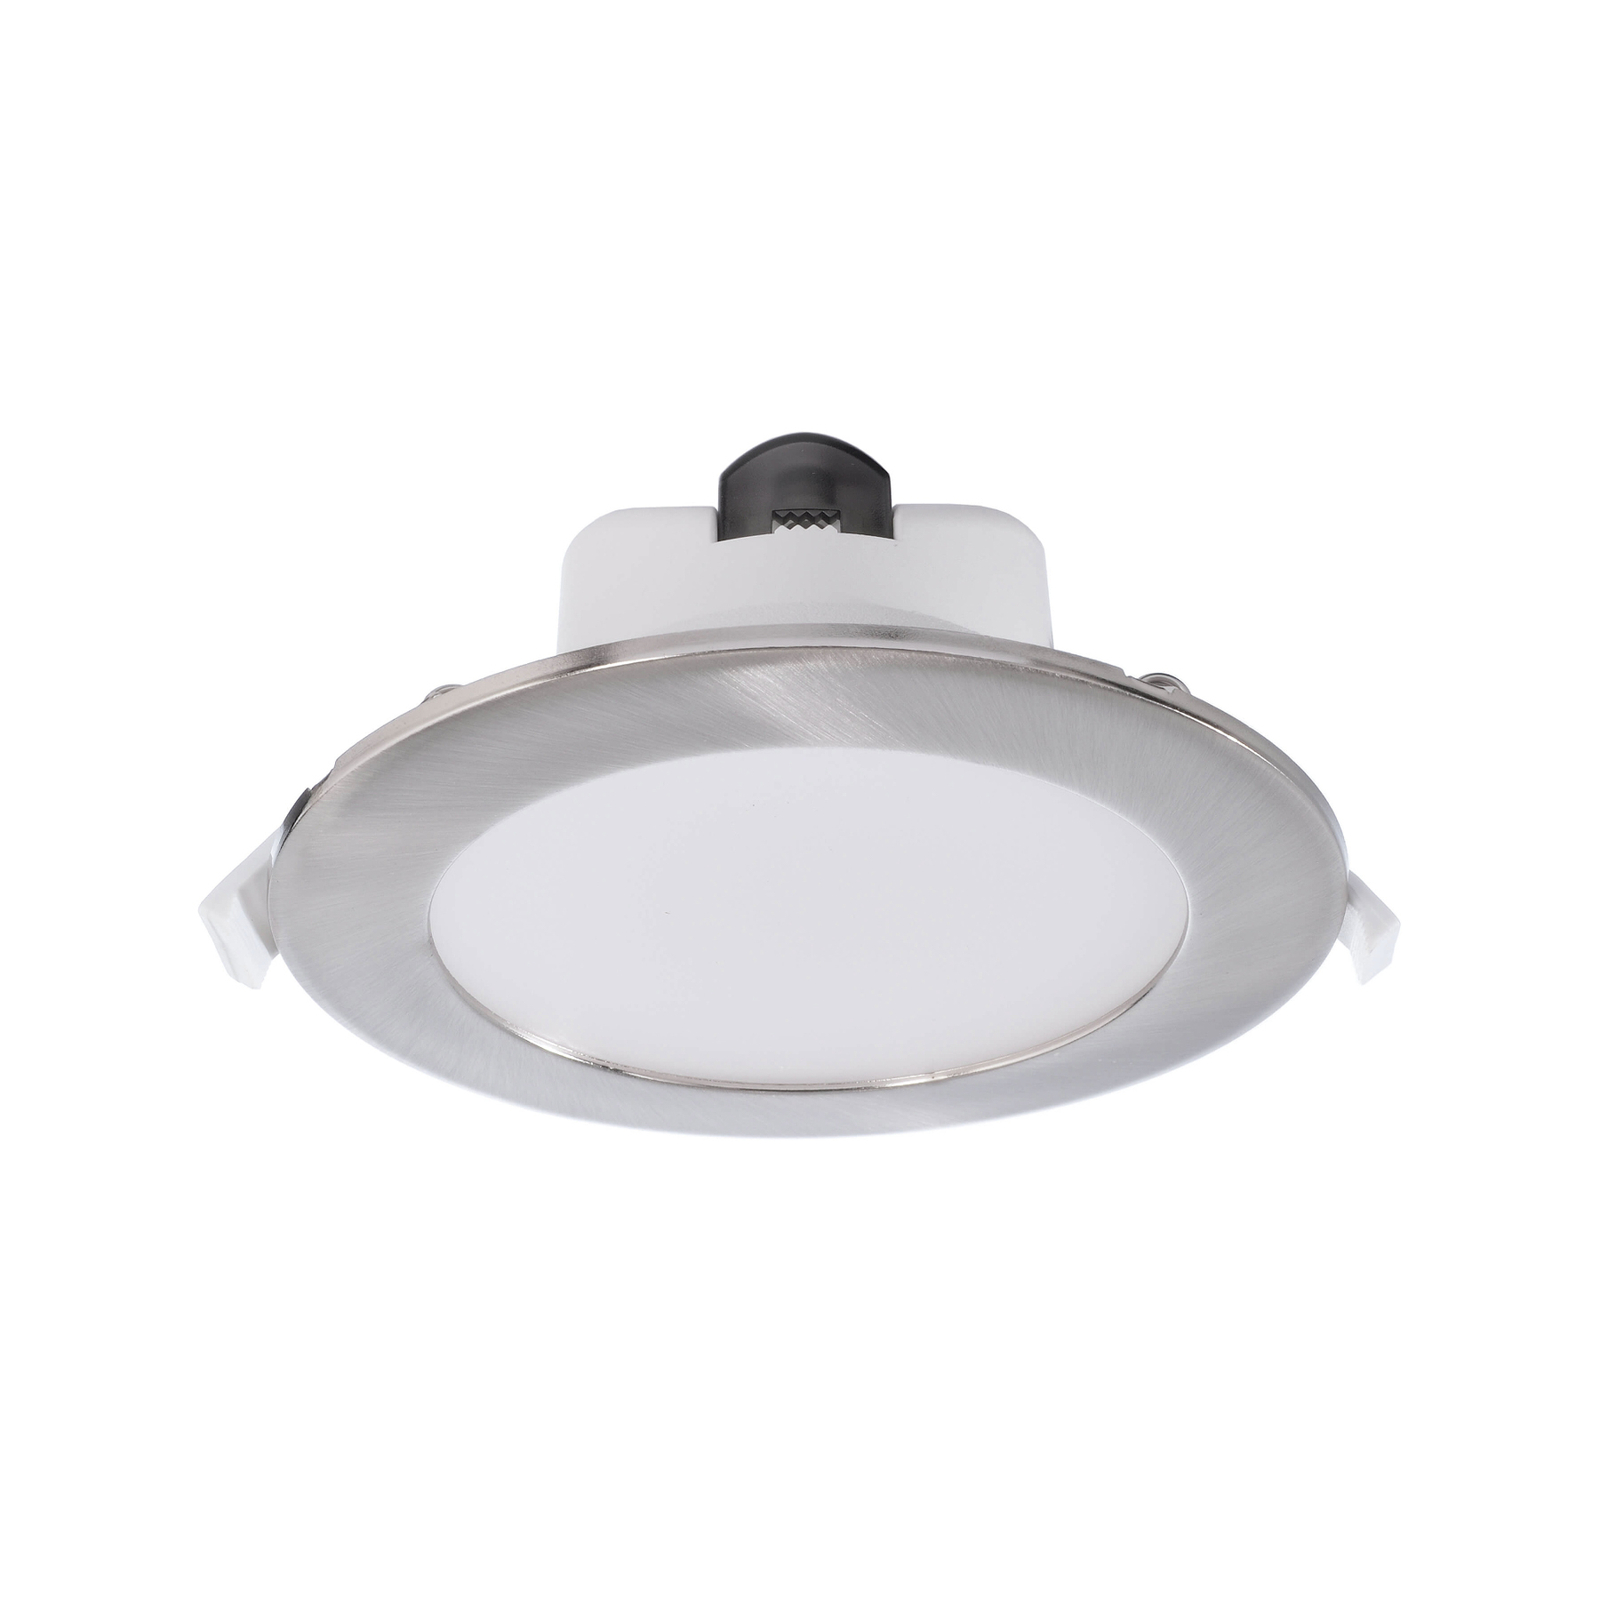 Acrux 145 LED recessed light, white, Ø 17.4 cm